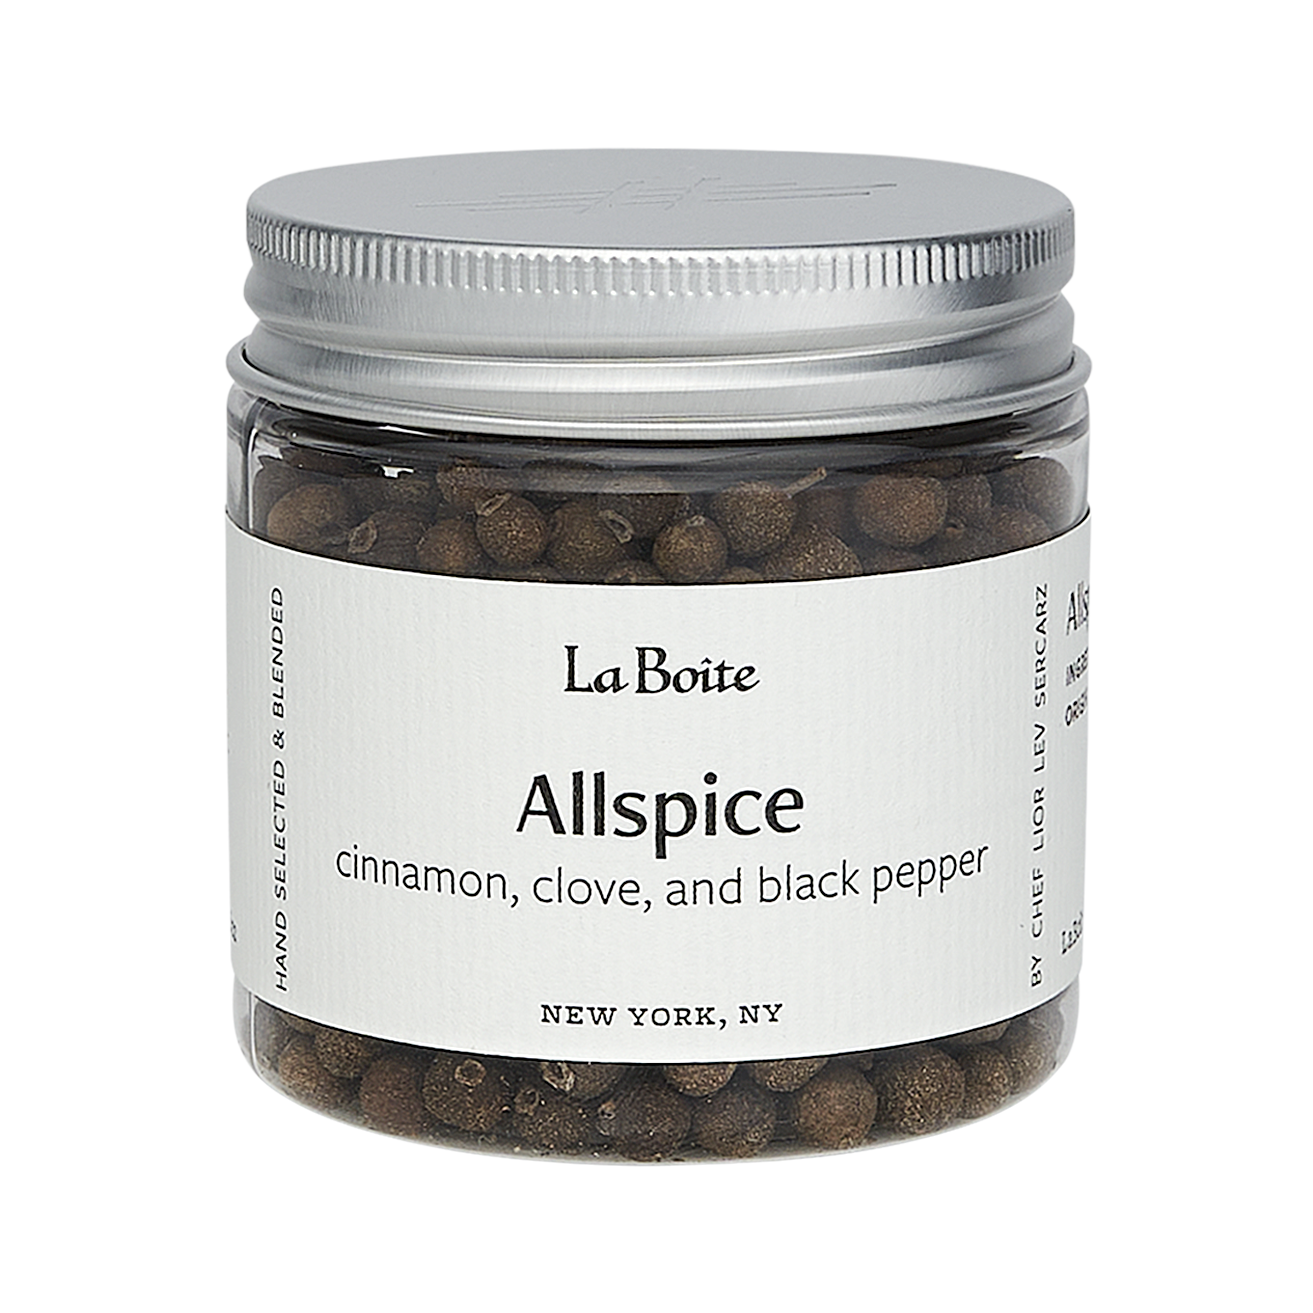 Allspice: traditional baking spice – Starlight Herb & Spice Company